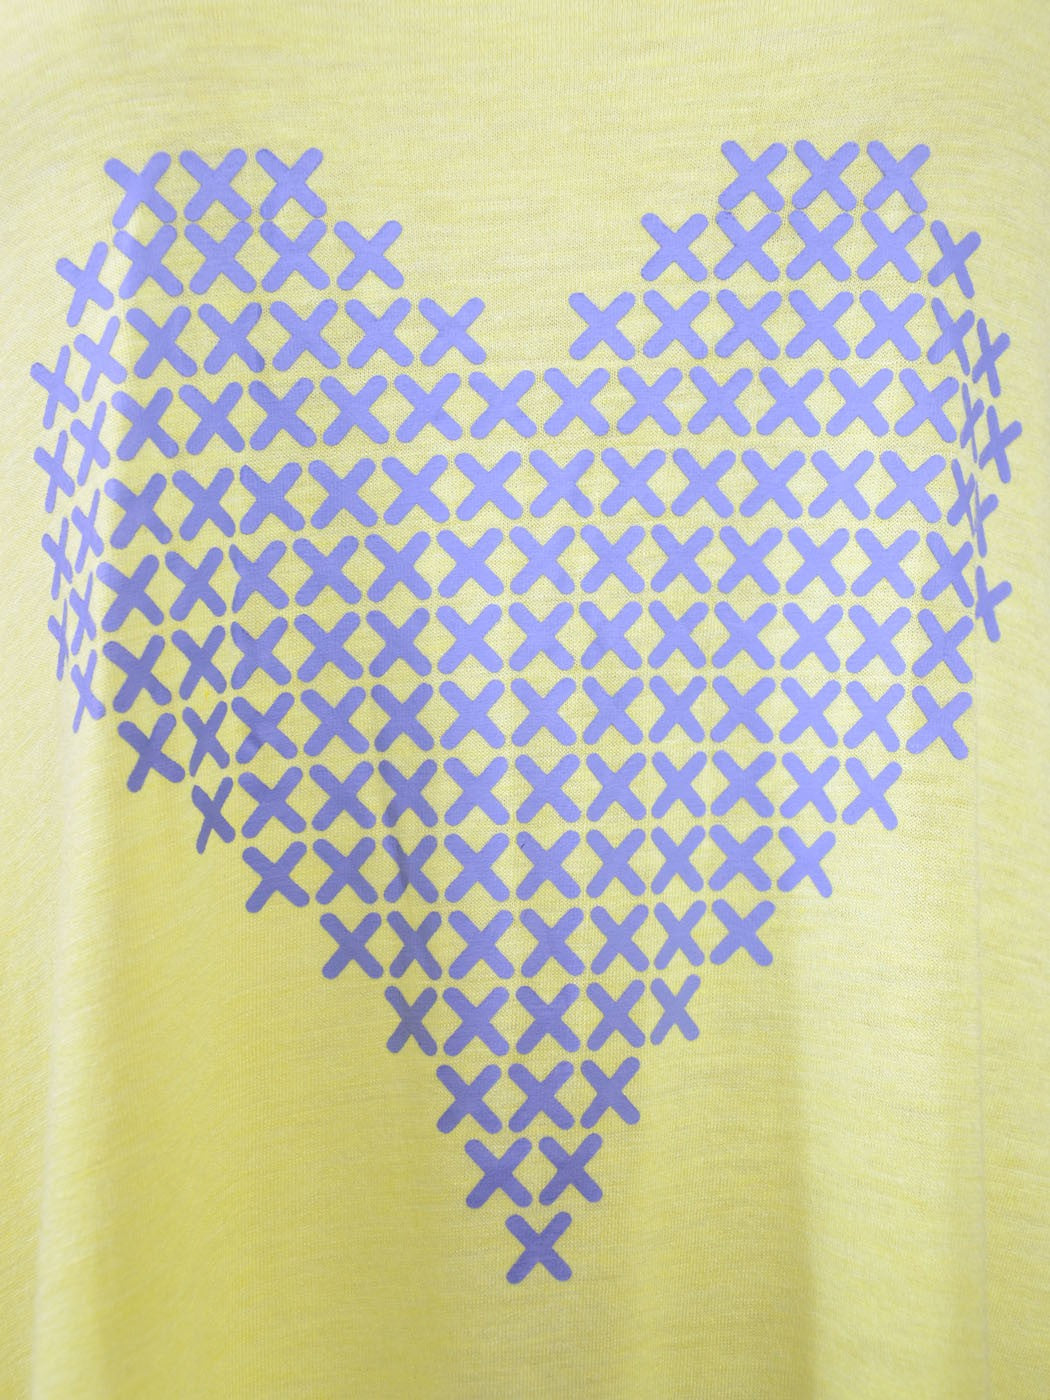 En Creme Summer Love XX Heart Print Asymmetrical Hem Jersey Knit Tank Top